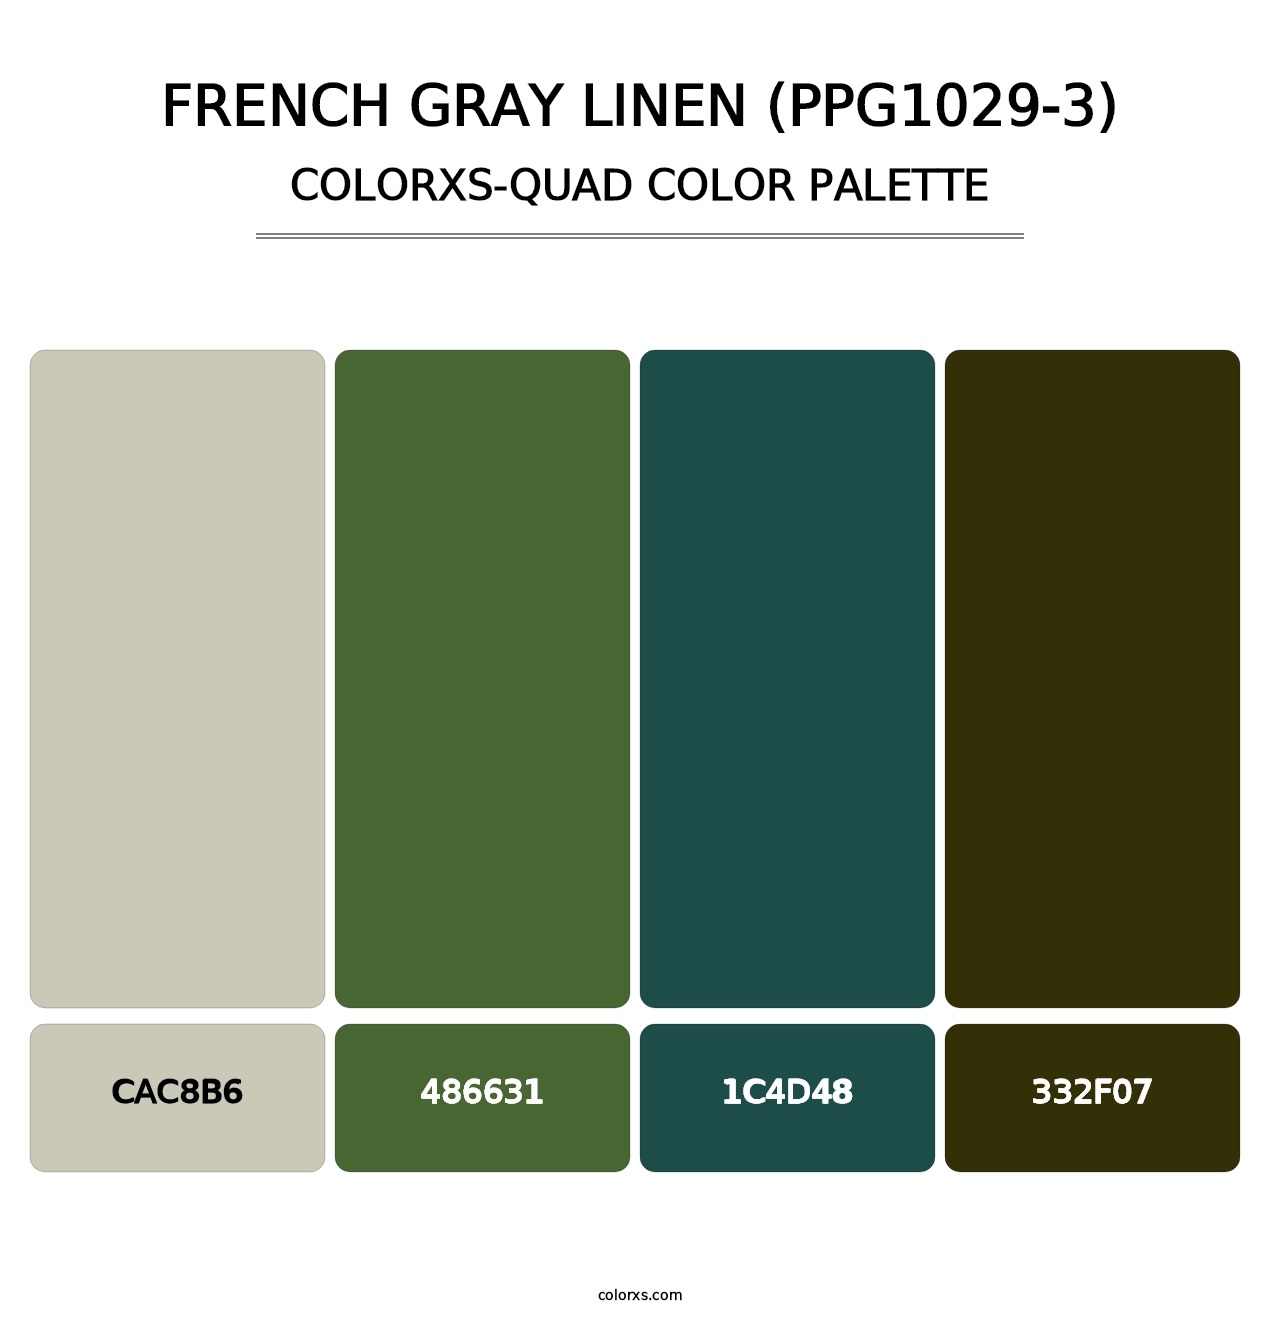 French Gray Linen (PPG1029-3) - Colorxs Quad Palette